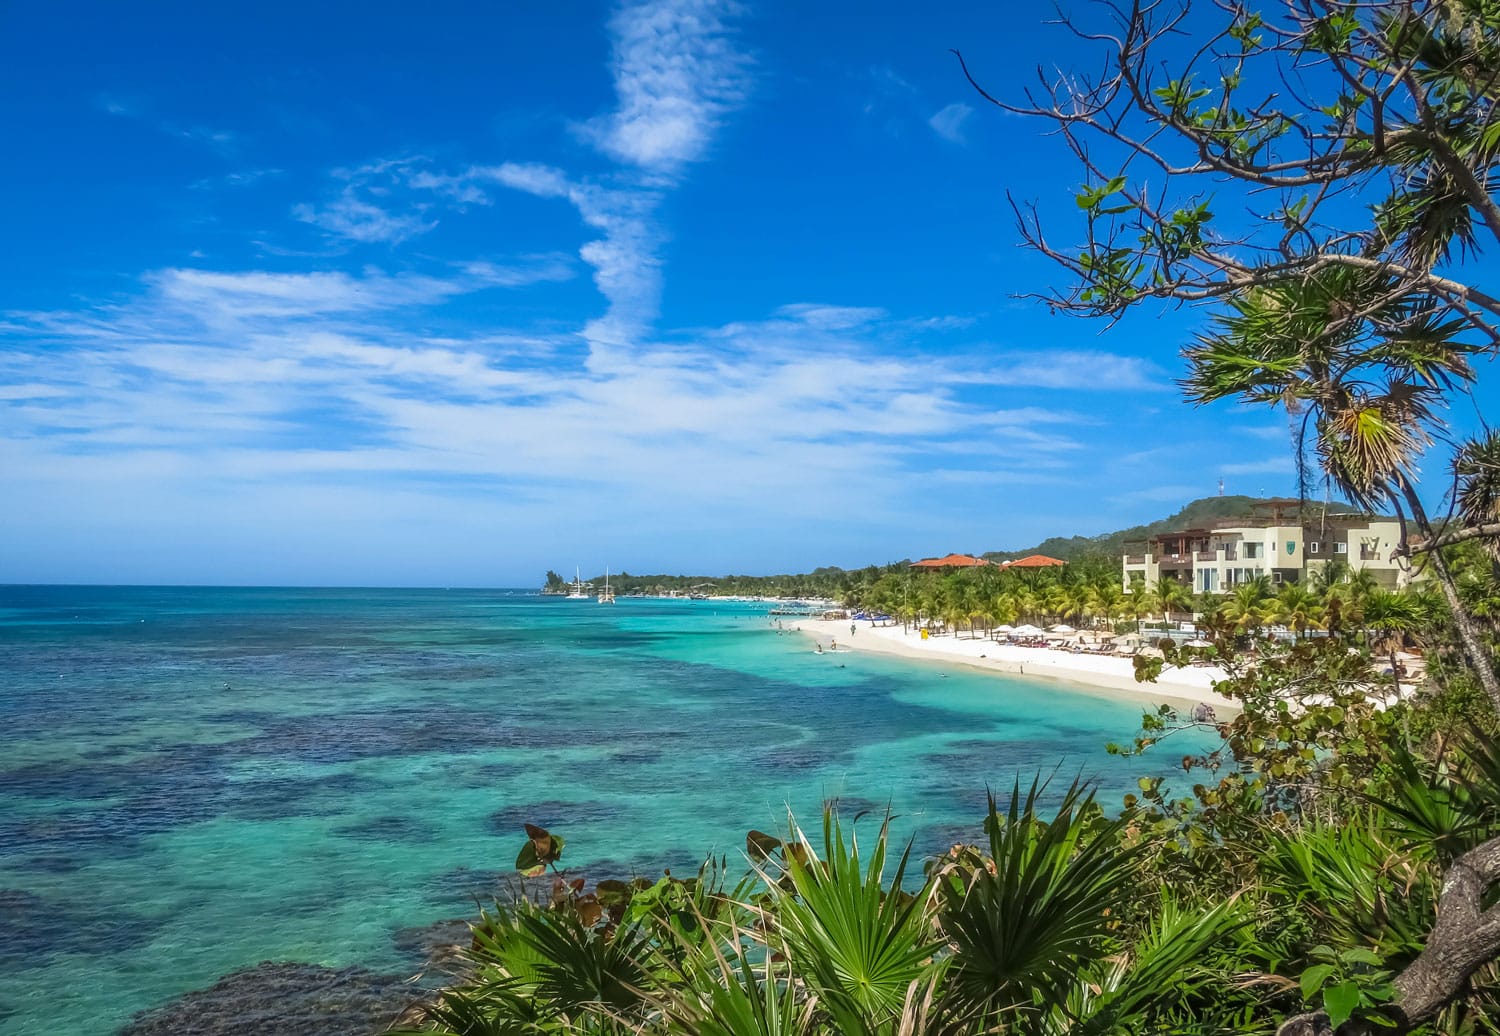 Landscape of a tropical blue ocean water and sandy beach in Roatan island